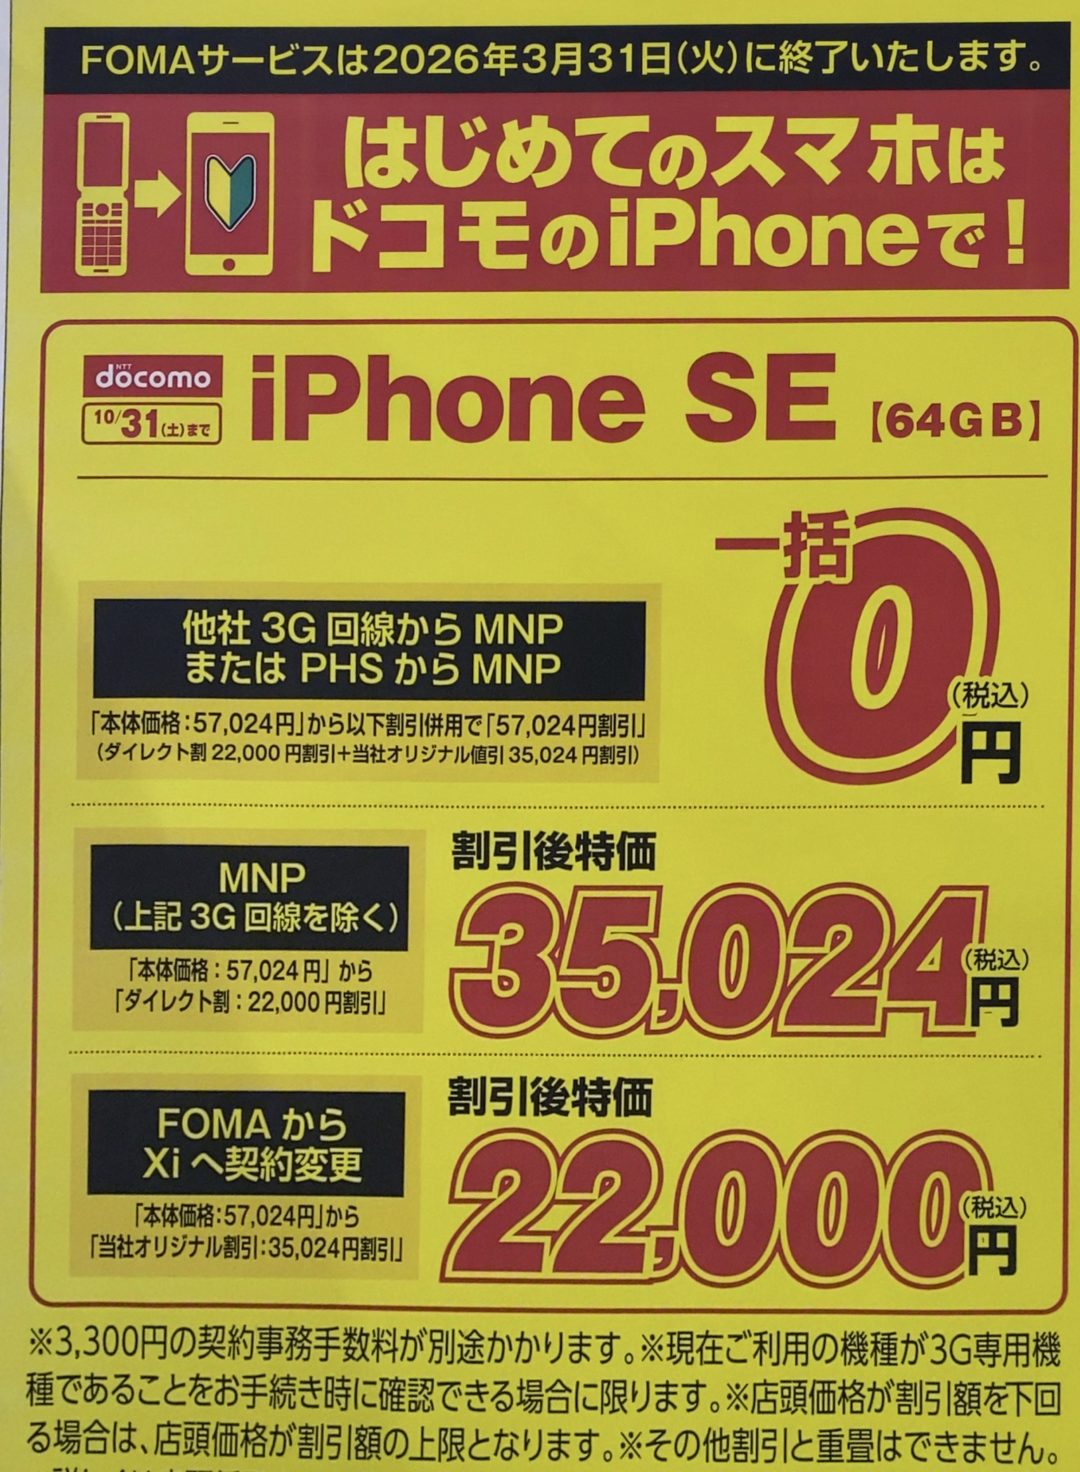 一括 0 円 Iphone